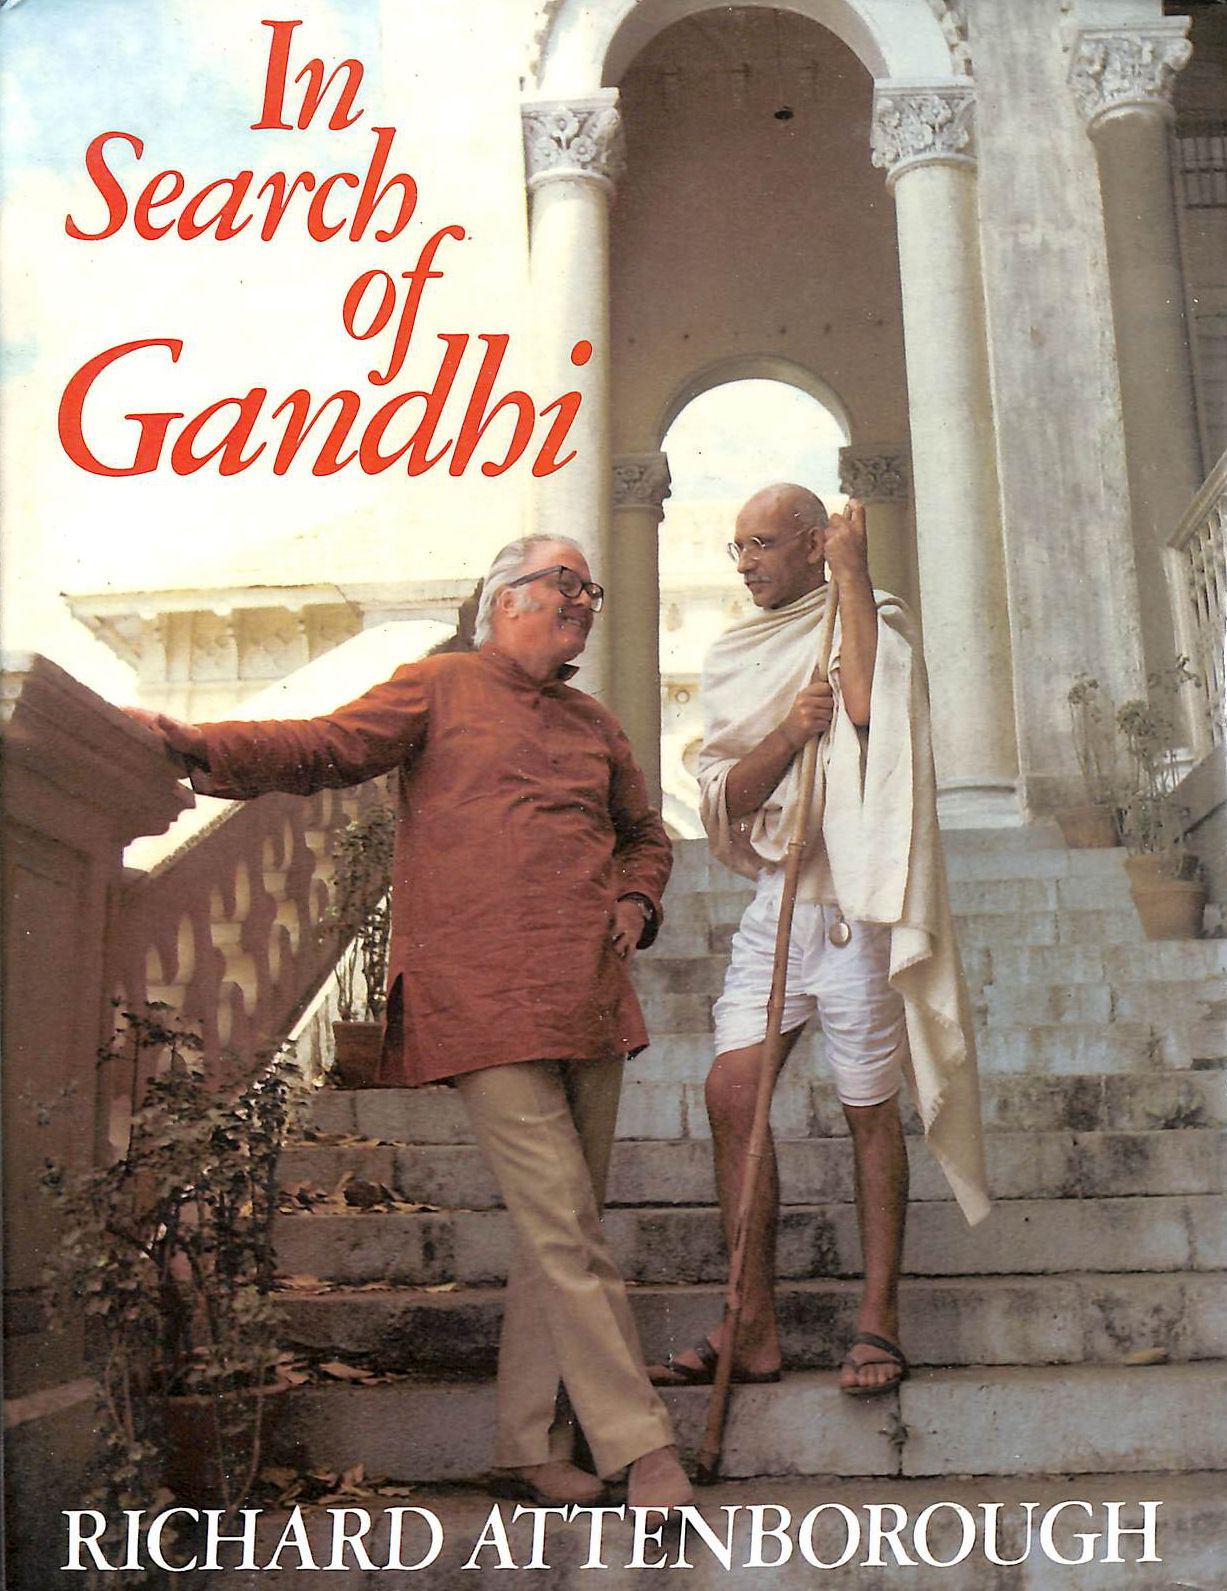 ATTENBOROUGH, RICHARD - In Search of Gandhi